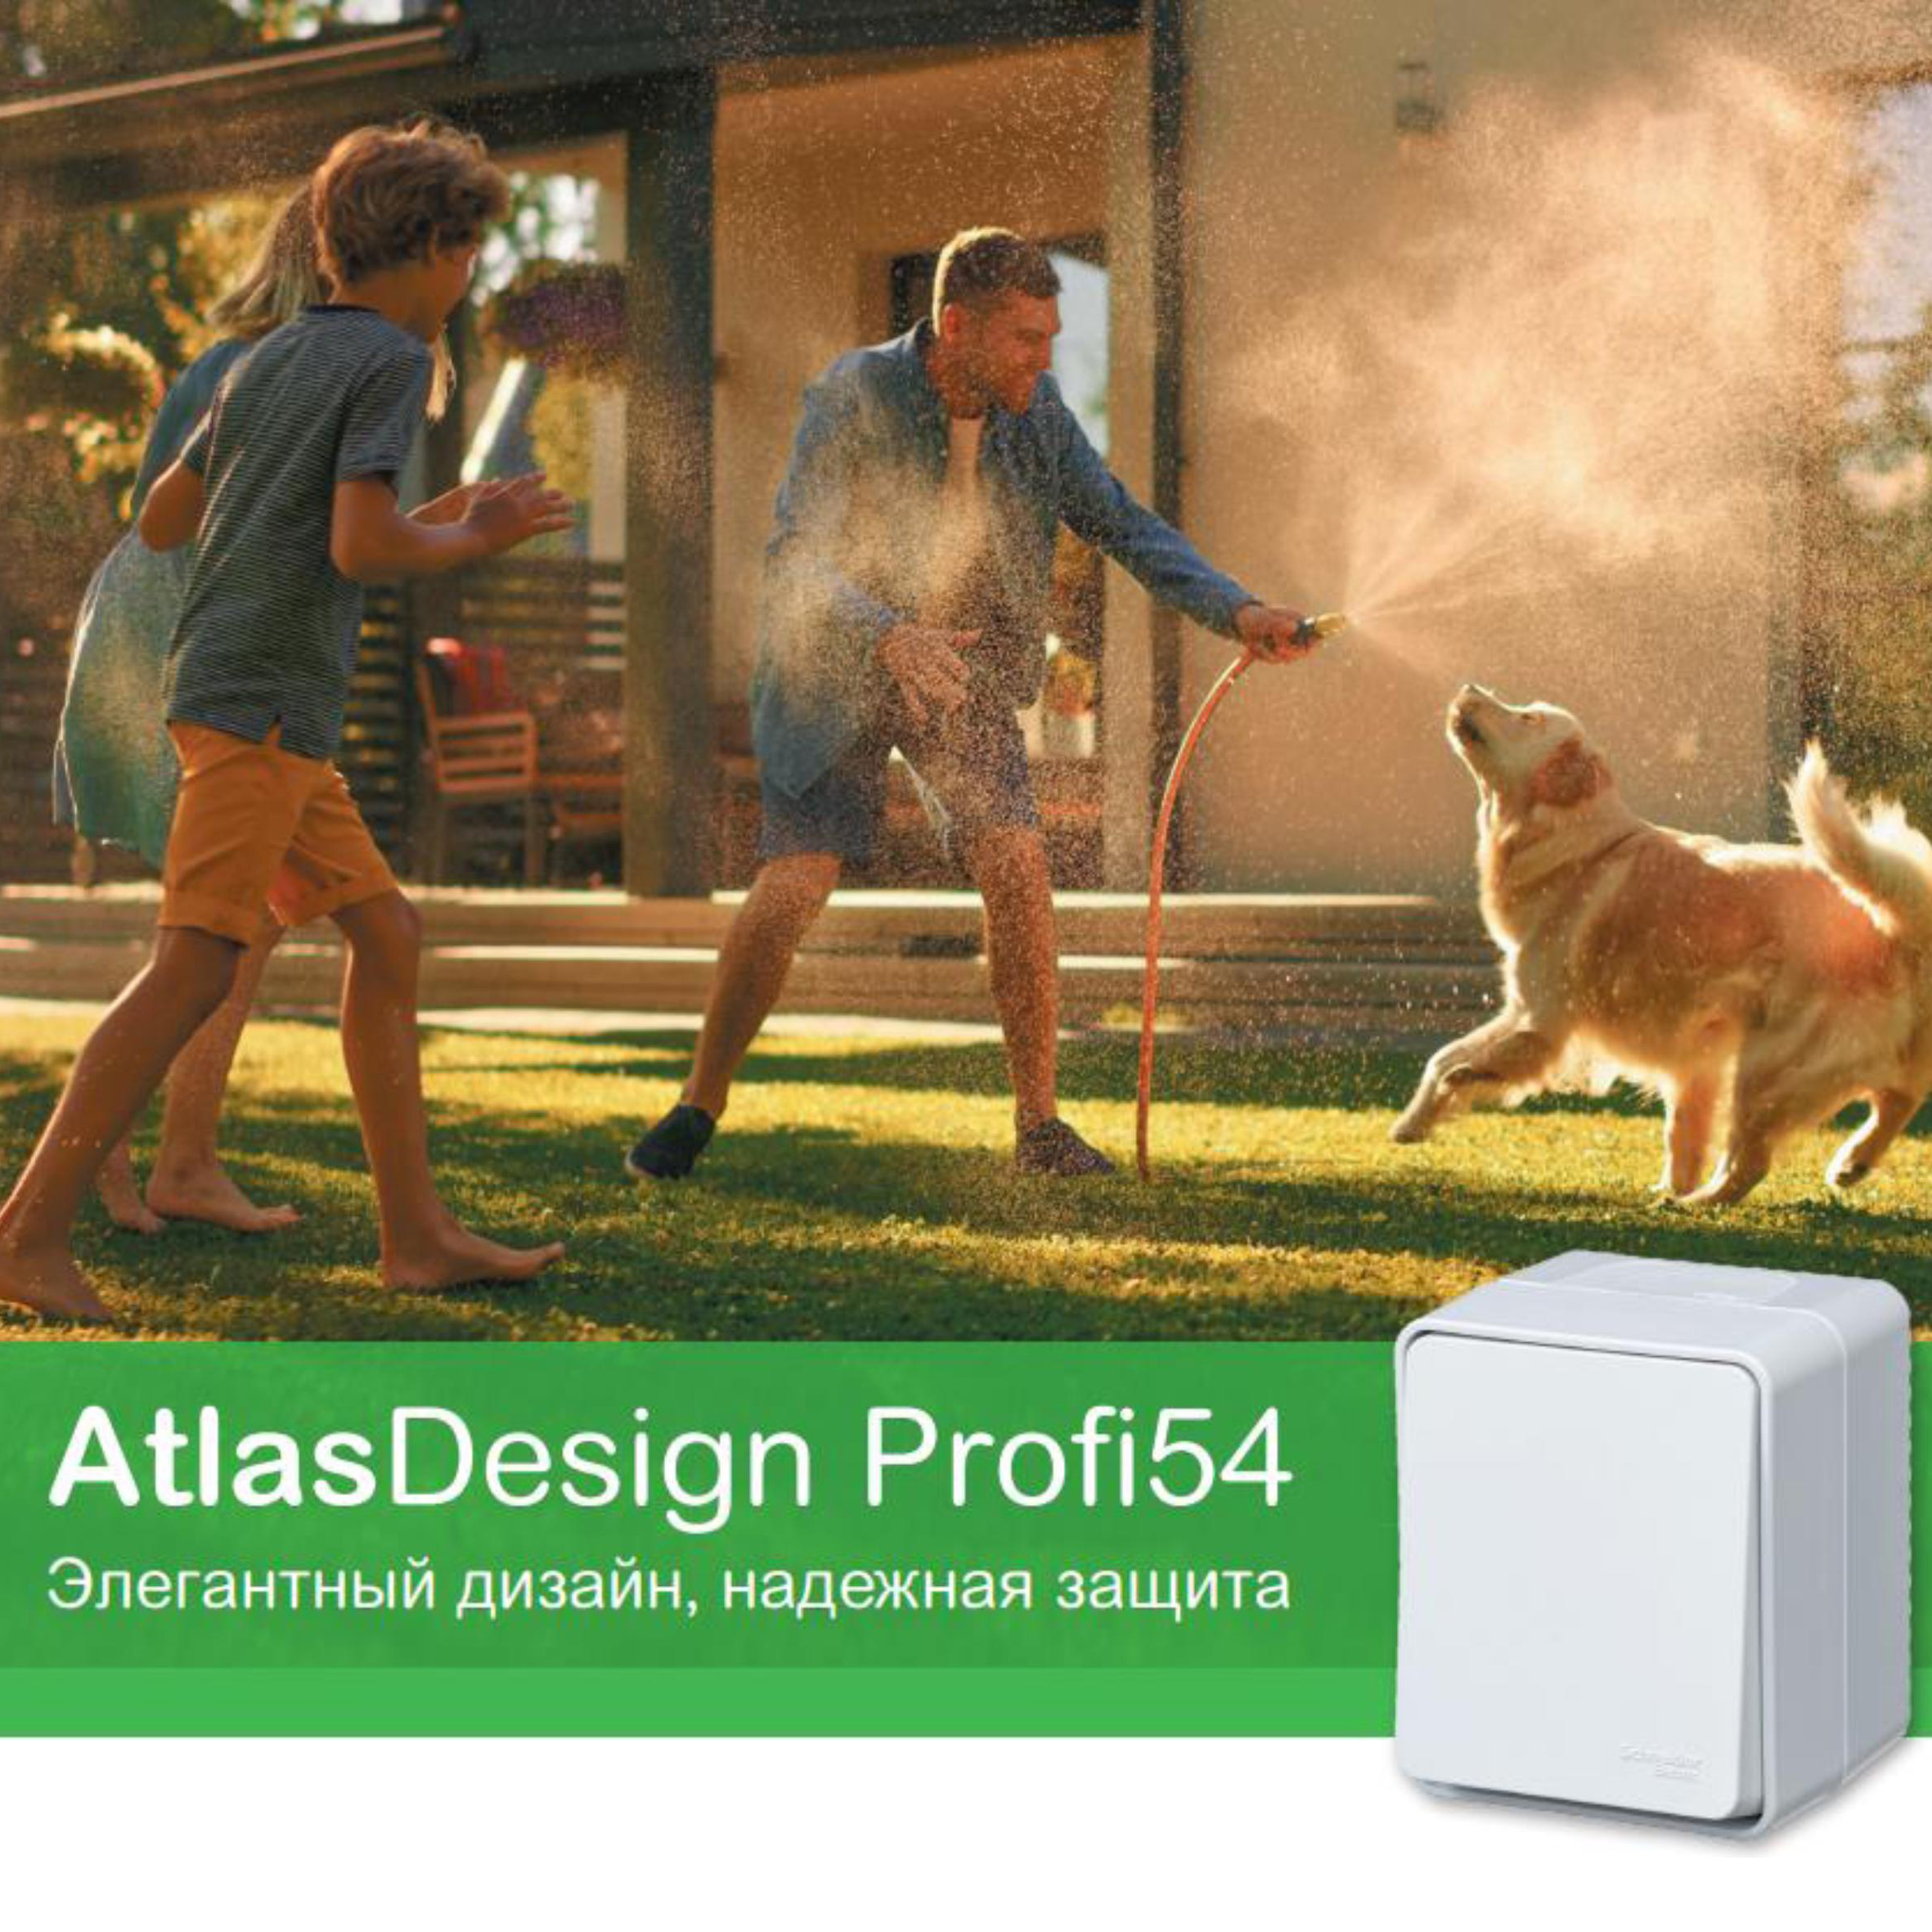 AtlasDesign Profi54